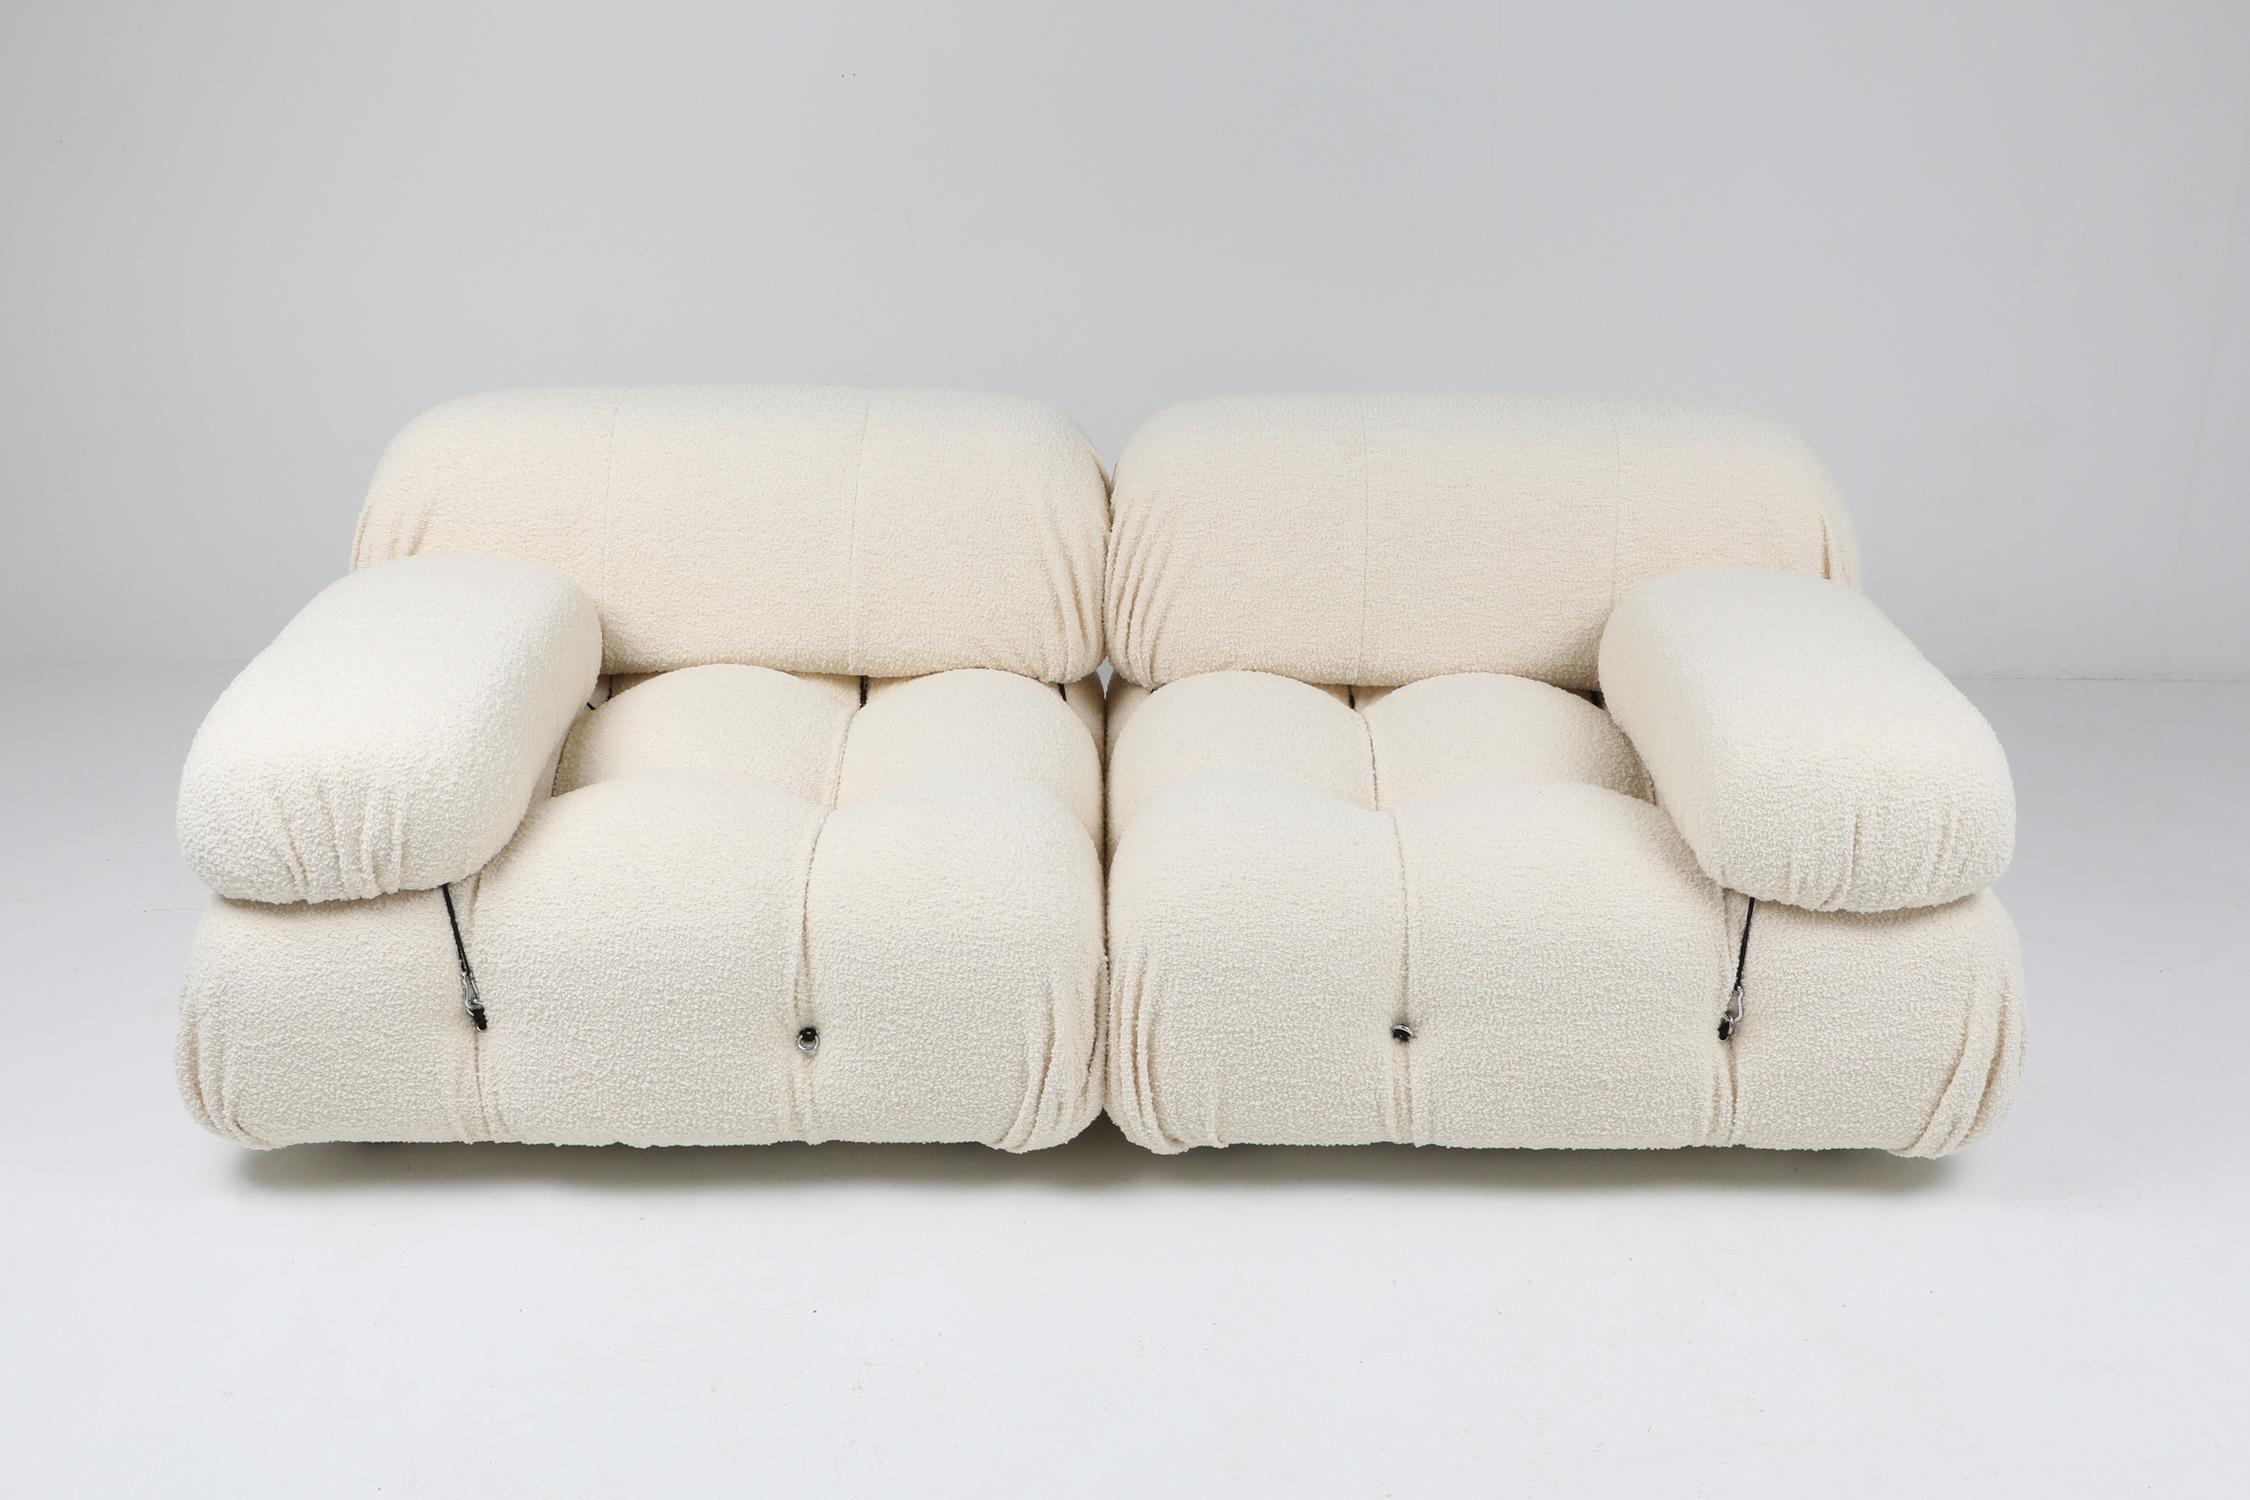 European Camaleonda Sofa in Boucle Wool by Mario Bellini